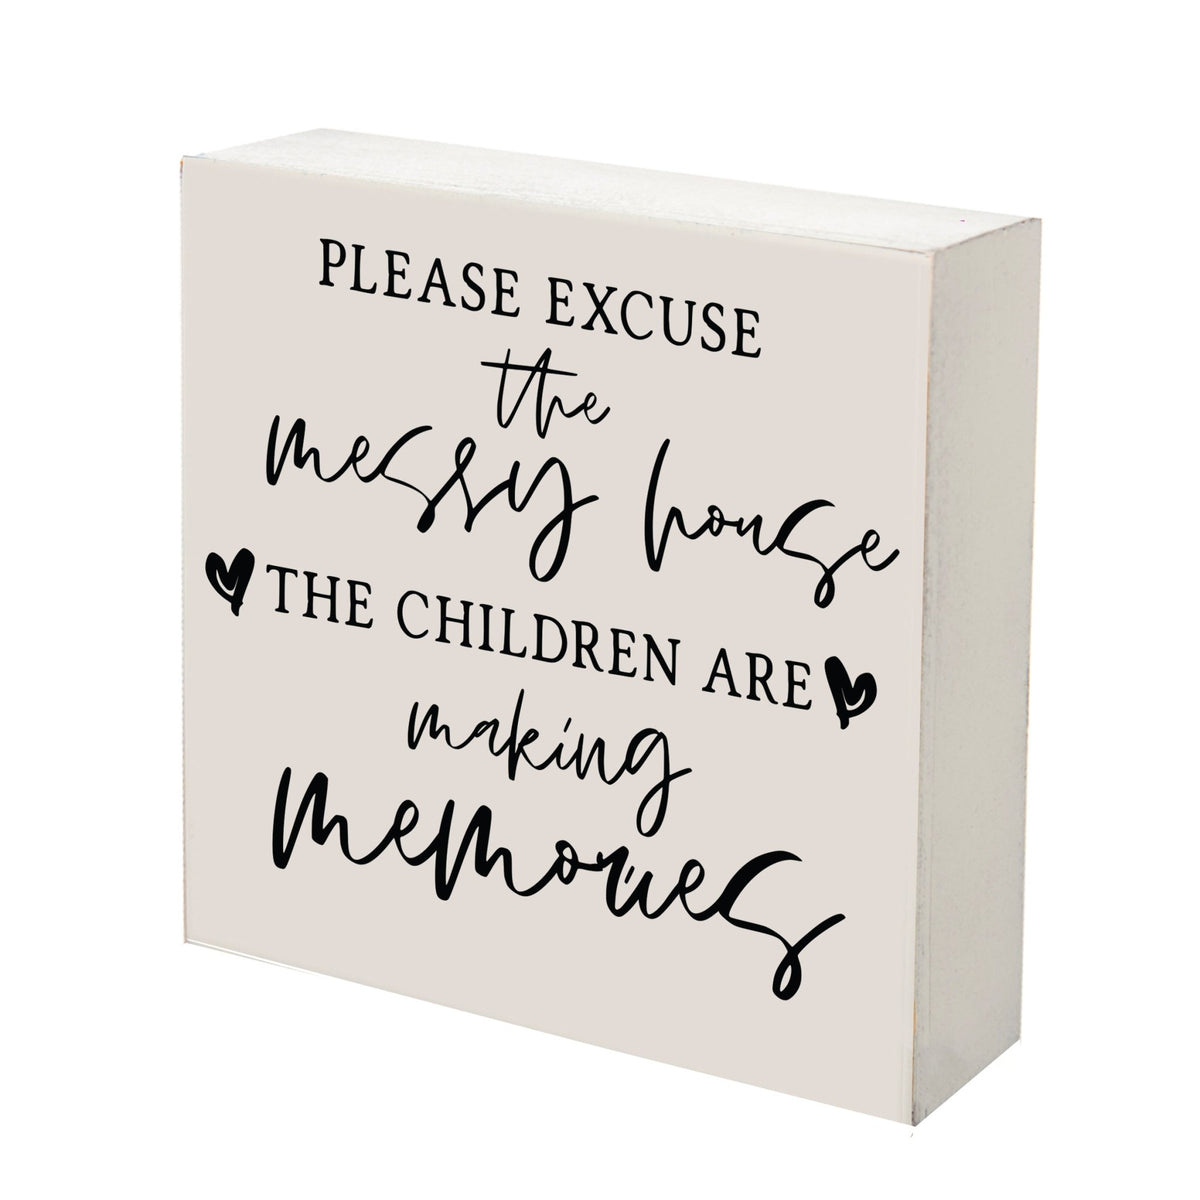 Inspiring Modern Framed Shadow Box 10x10 The Children Are - LifeSong Milestones